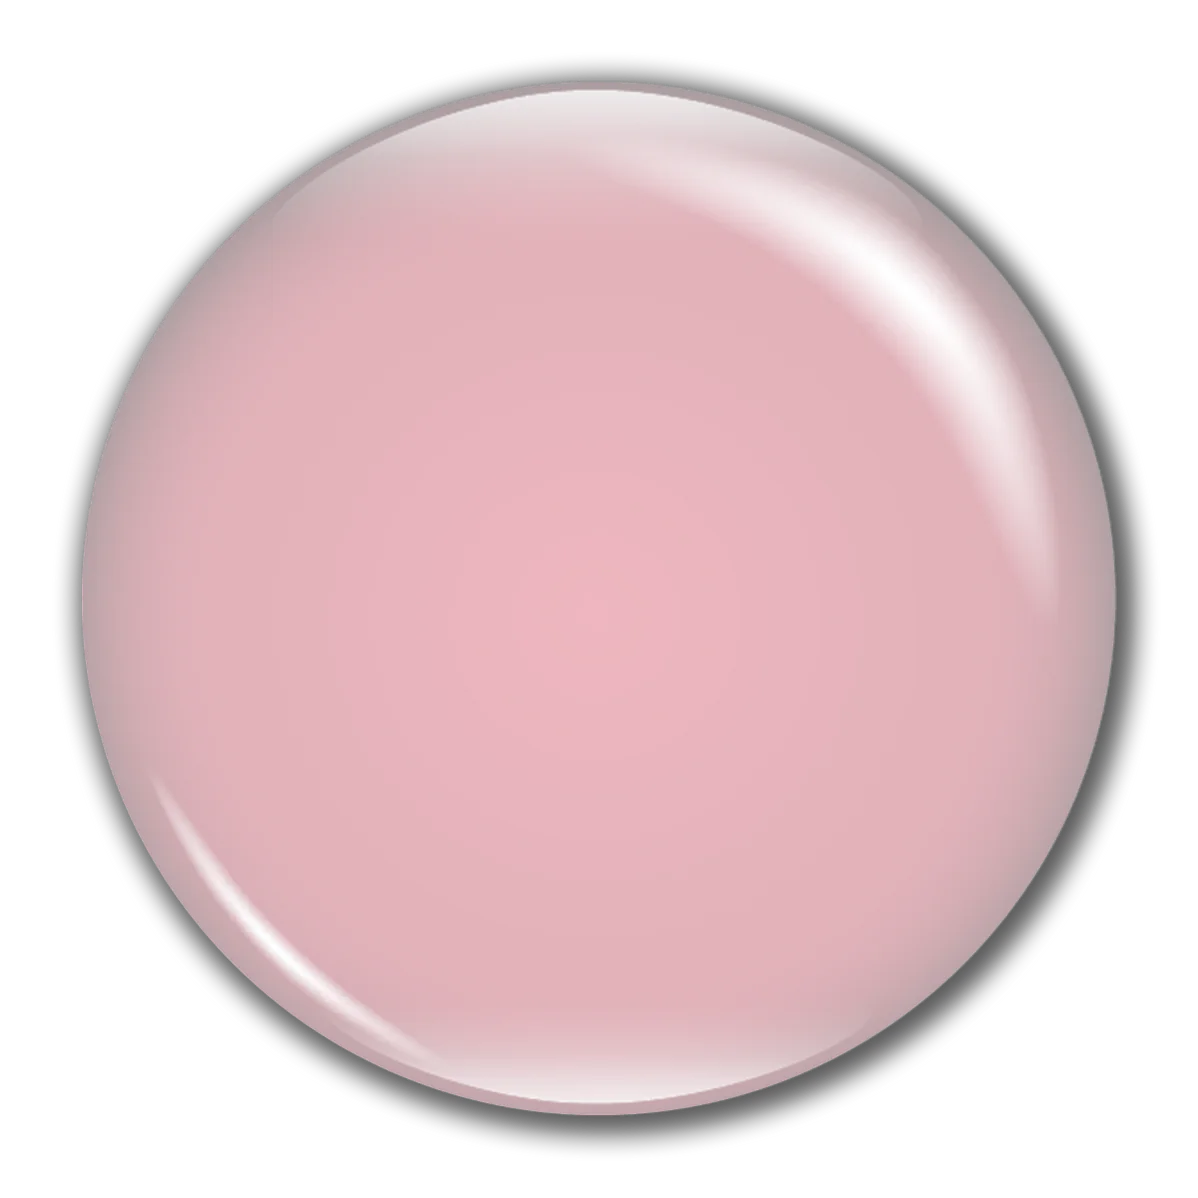 Pink 1-Step Lexy Line Gel